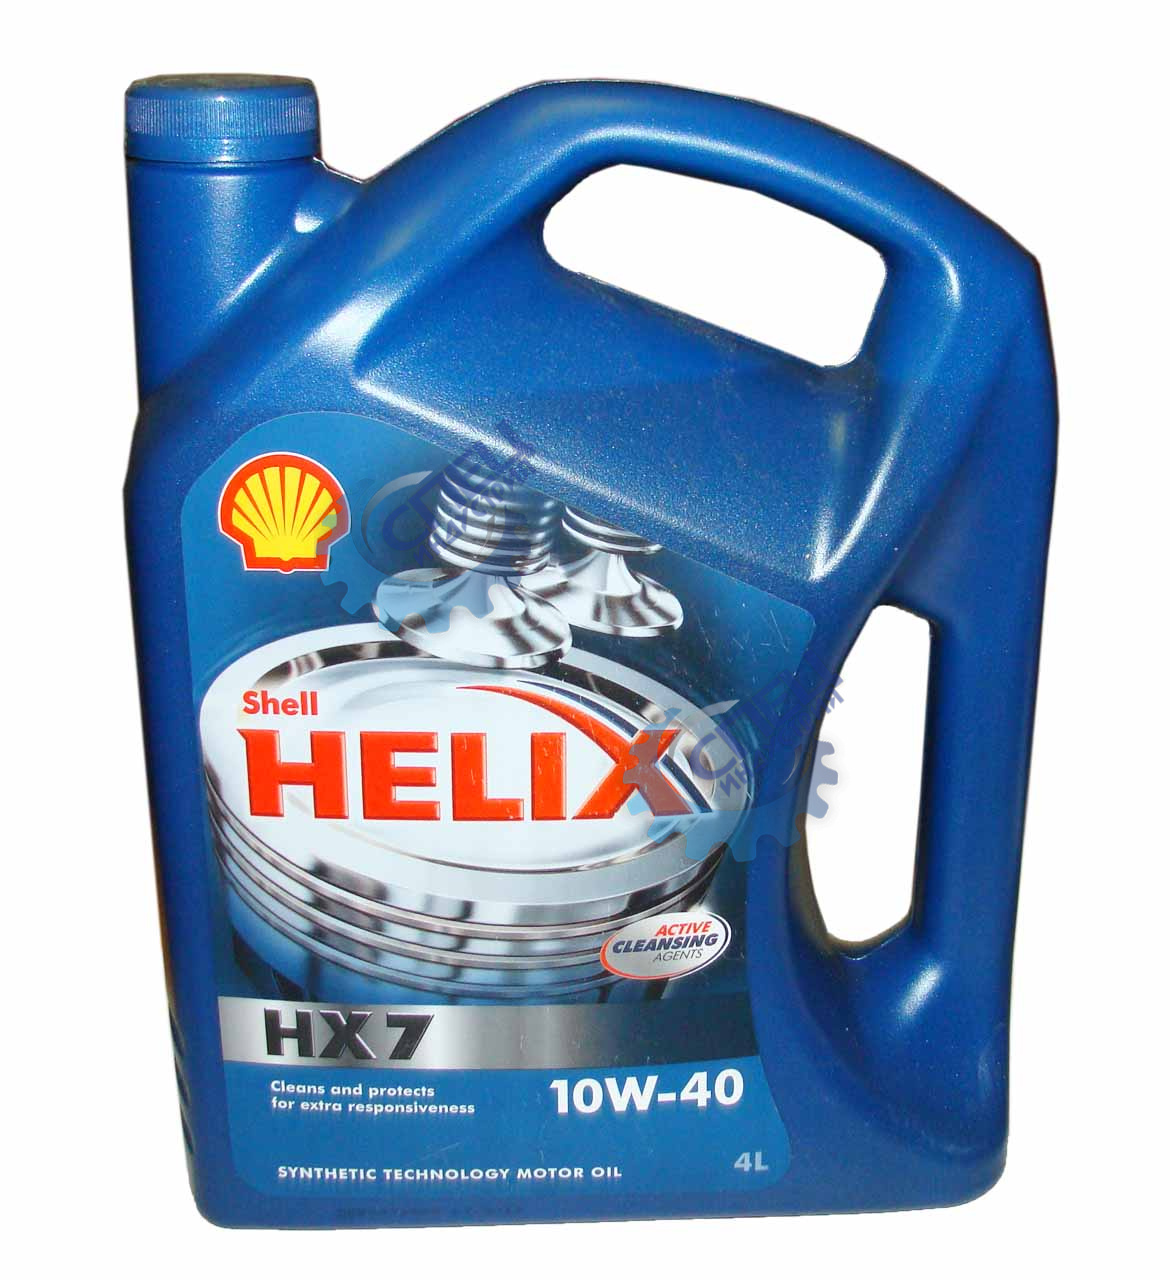 Моторное масло шелл хеликс 10w 40. Shell hx7 Diesel. Shell HX 7 10w 40 Active Cleansing. Shell Helix HX 7 Diesel 10 40. Shell Helix 10w 40 Diesel.